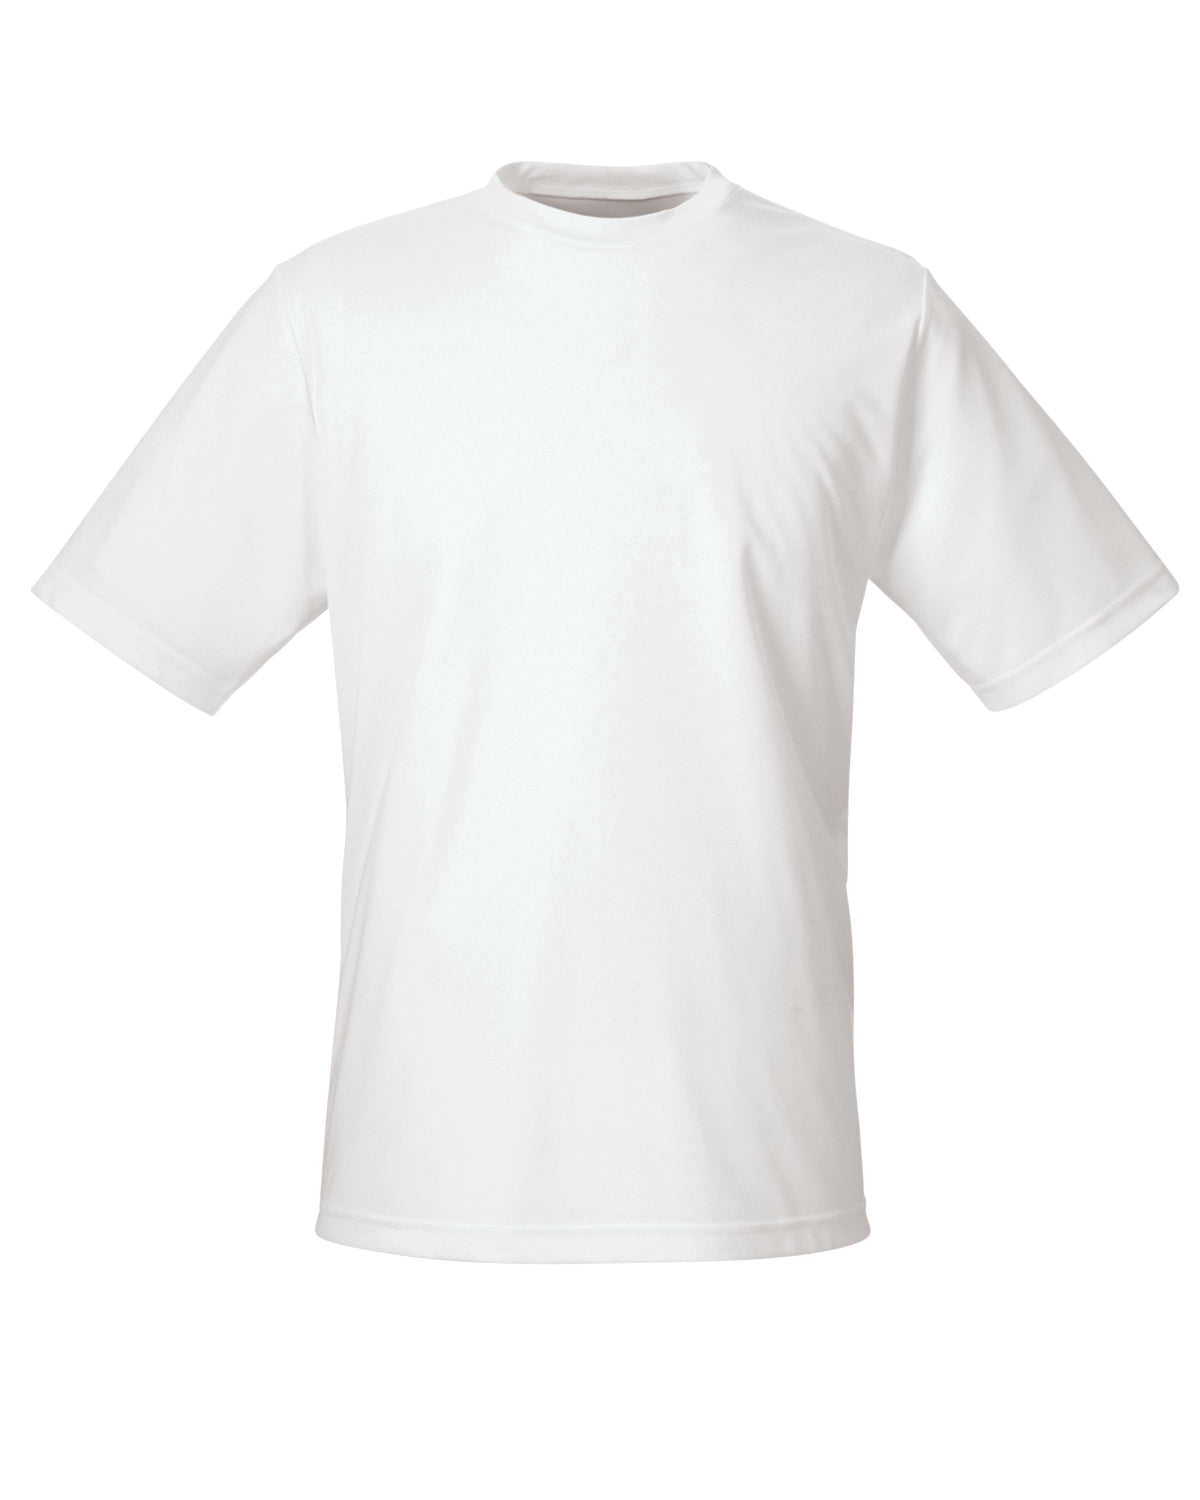 Adult Universal Zone Performance T-Shirt BRANDS VARY